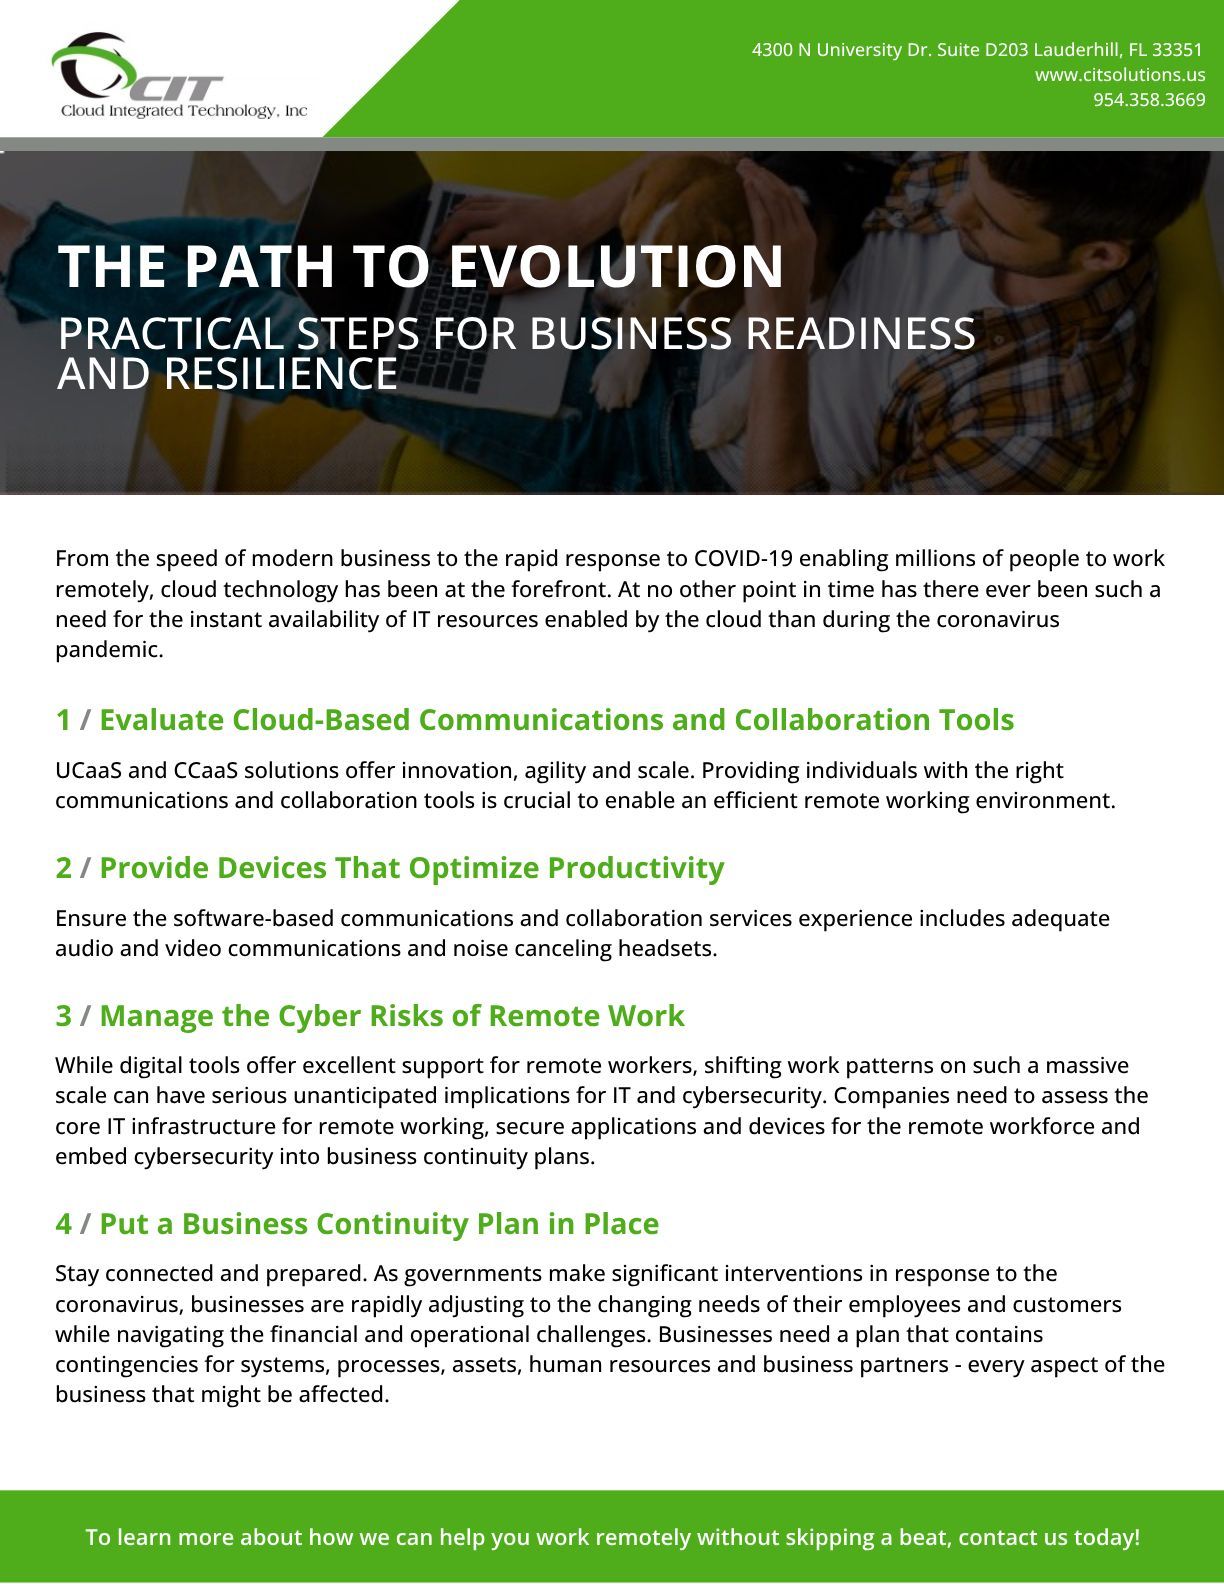 Path to evolution brochure